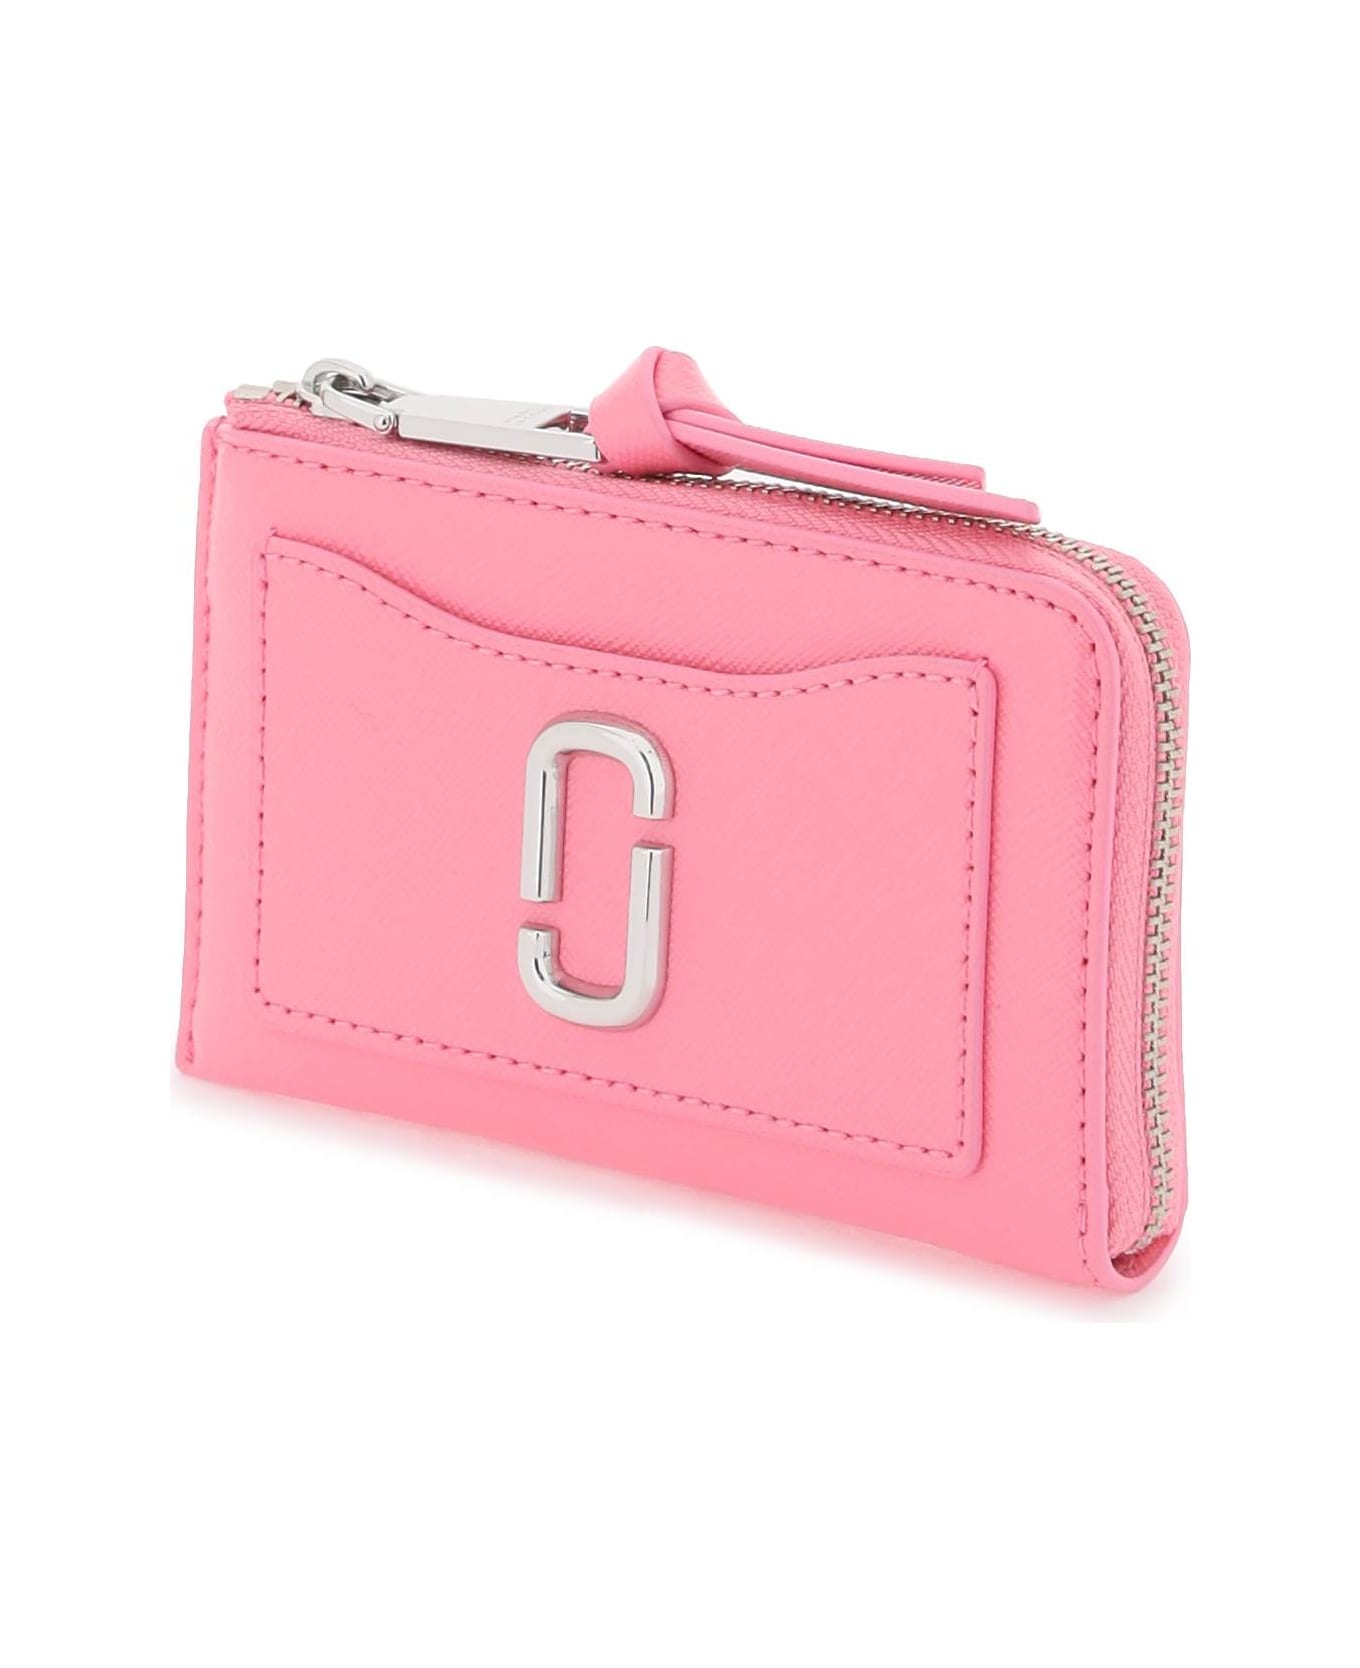 Marc Jacobs The Utility Snapshot Top Zip Multi Wallet - PETAL PINK (Pink)